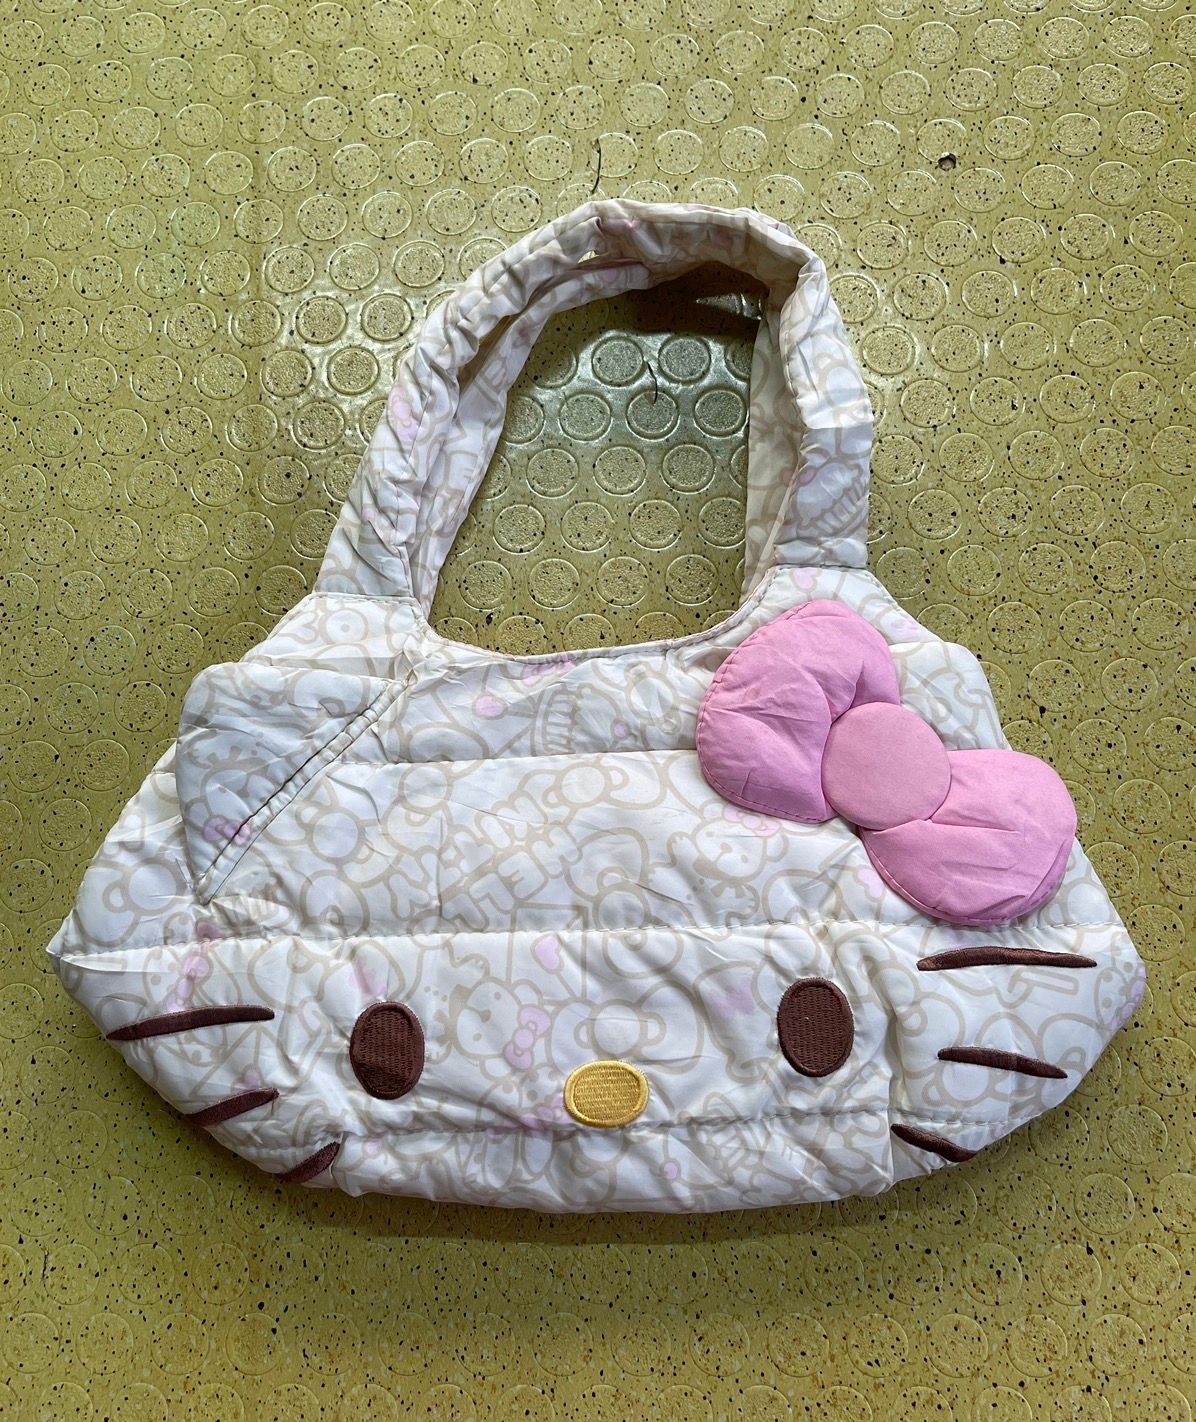 Japanese Brand - hello kitty tote bag tc5 - 1